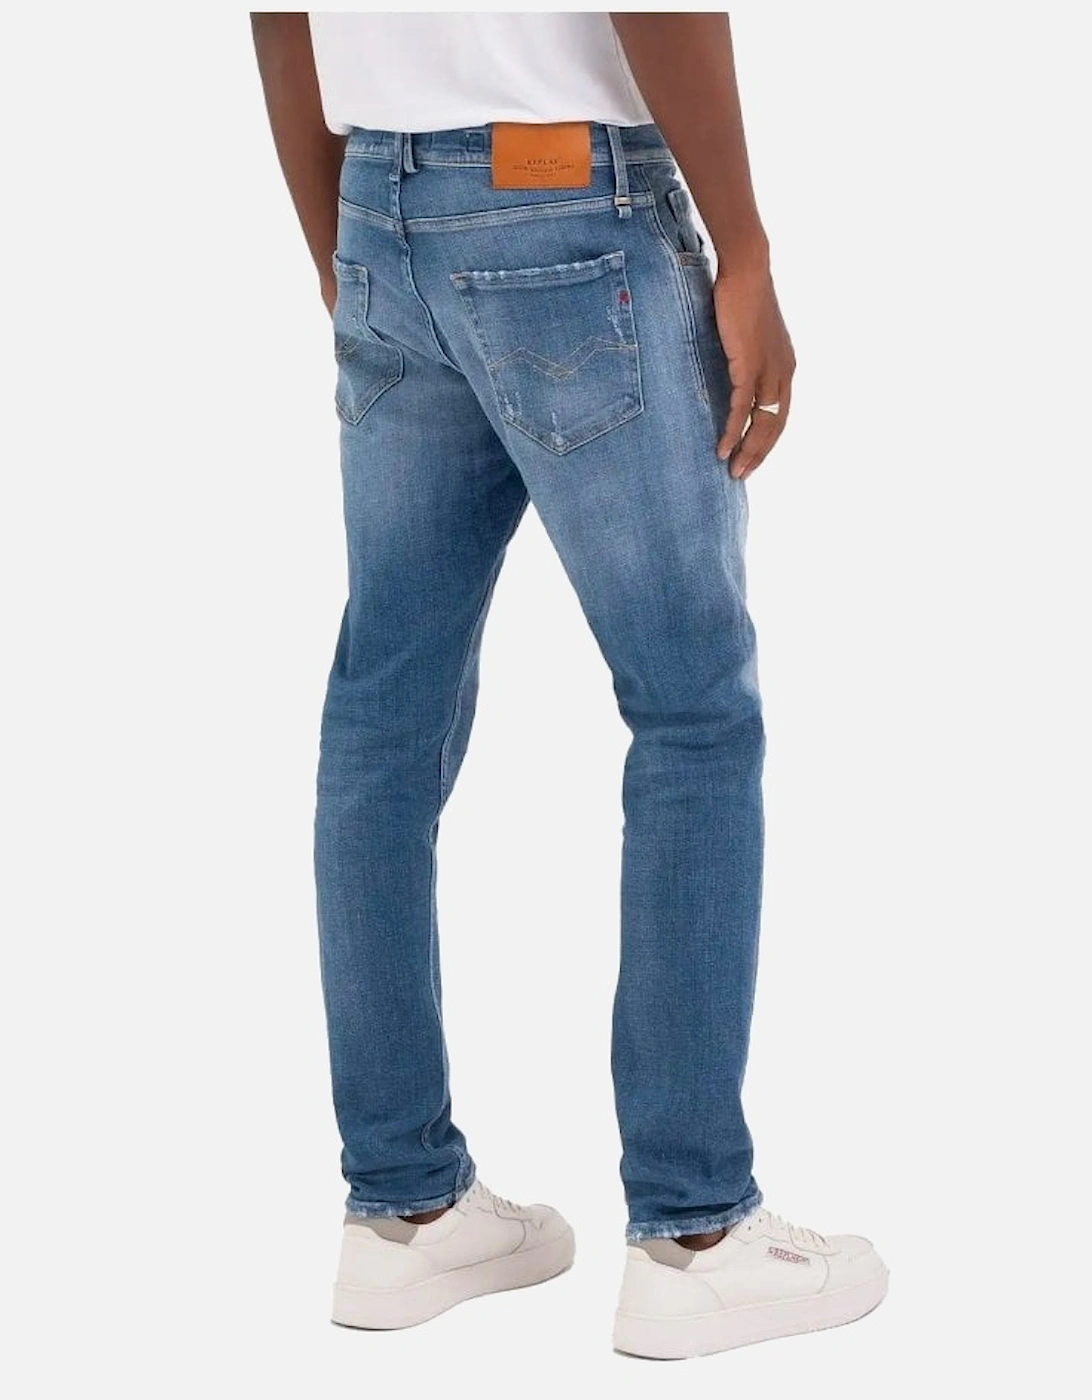 Mickym Premium Aged 10yrs Slim Jeans 009